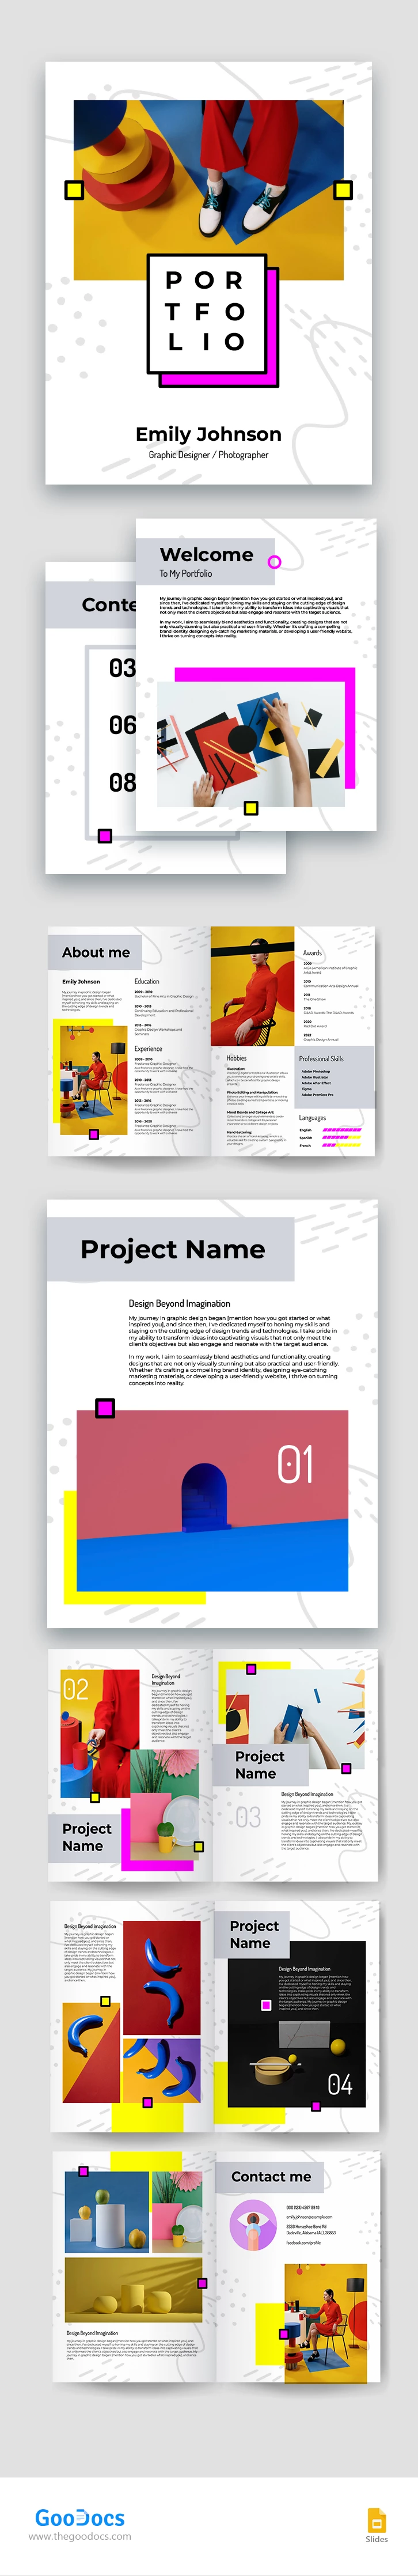 Portfolio du designer créatif - free Google Docs Template - 10067394